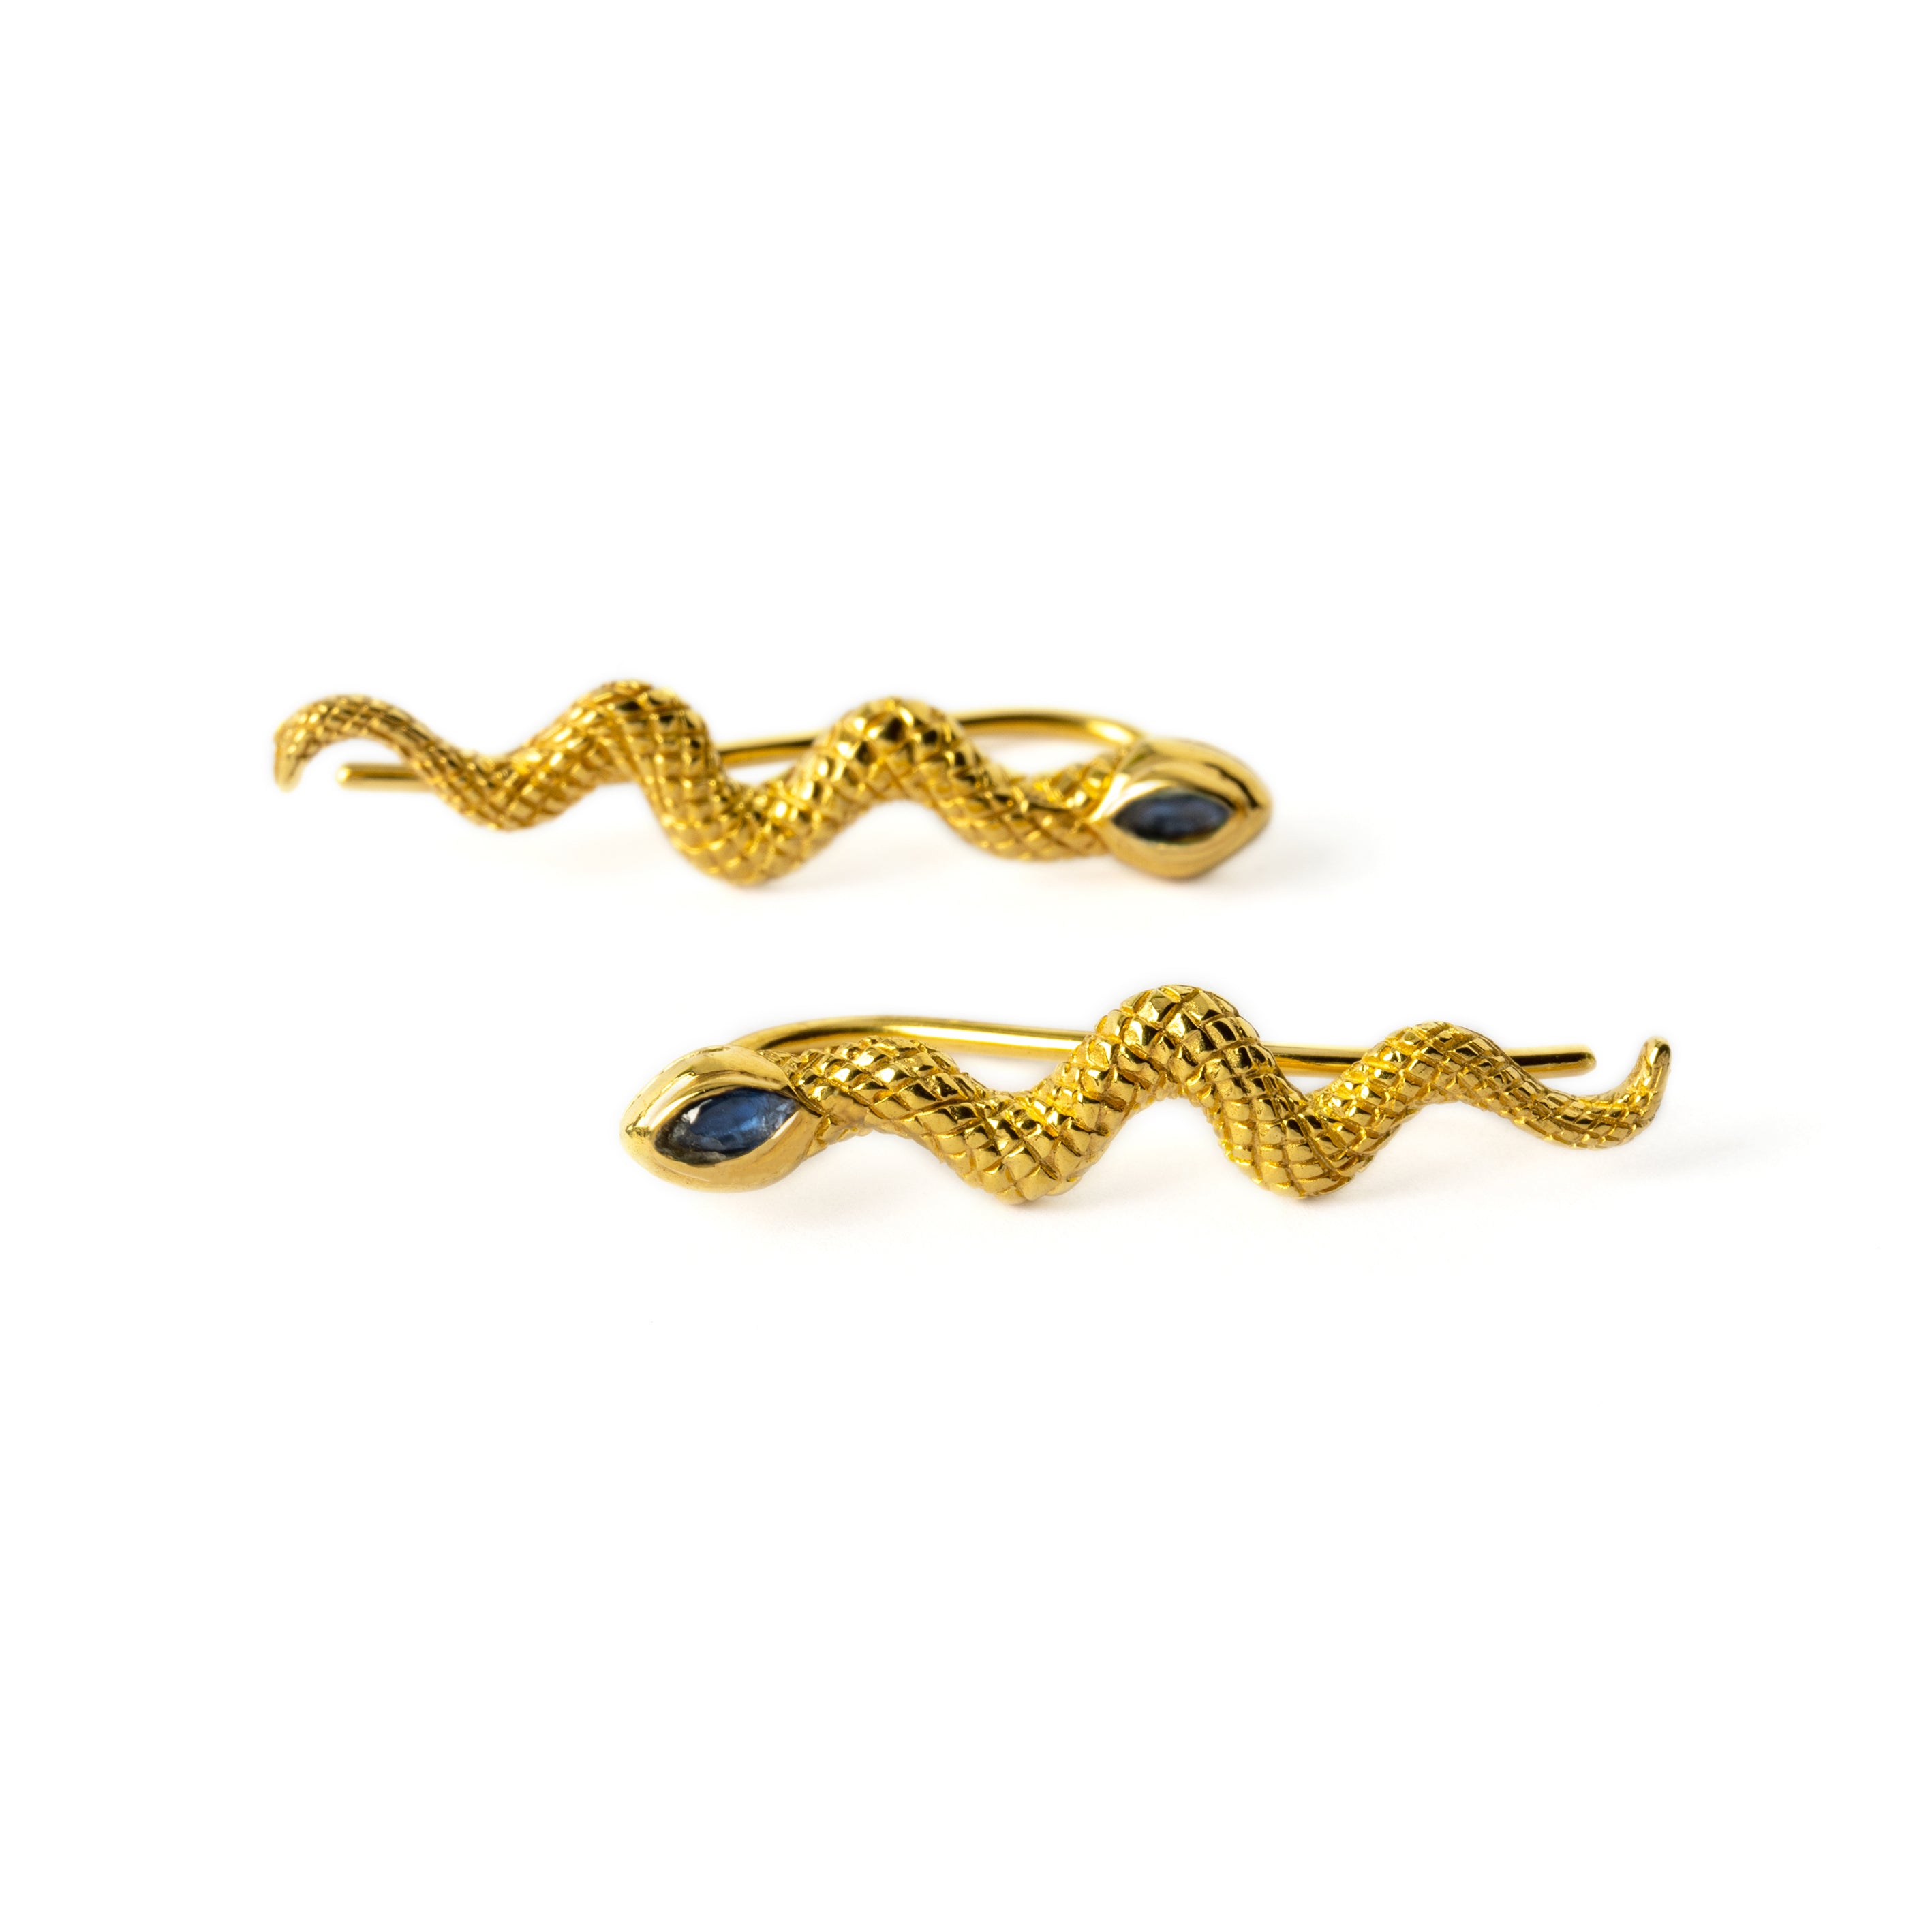 Naga Gold Ear Climbers - Sapphire frontal view